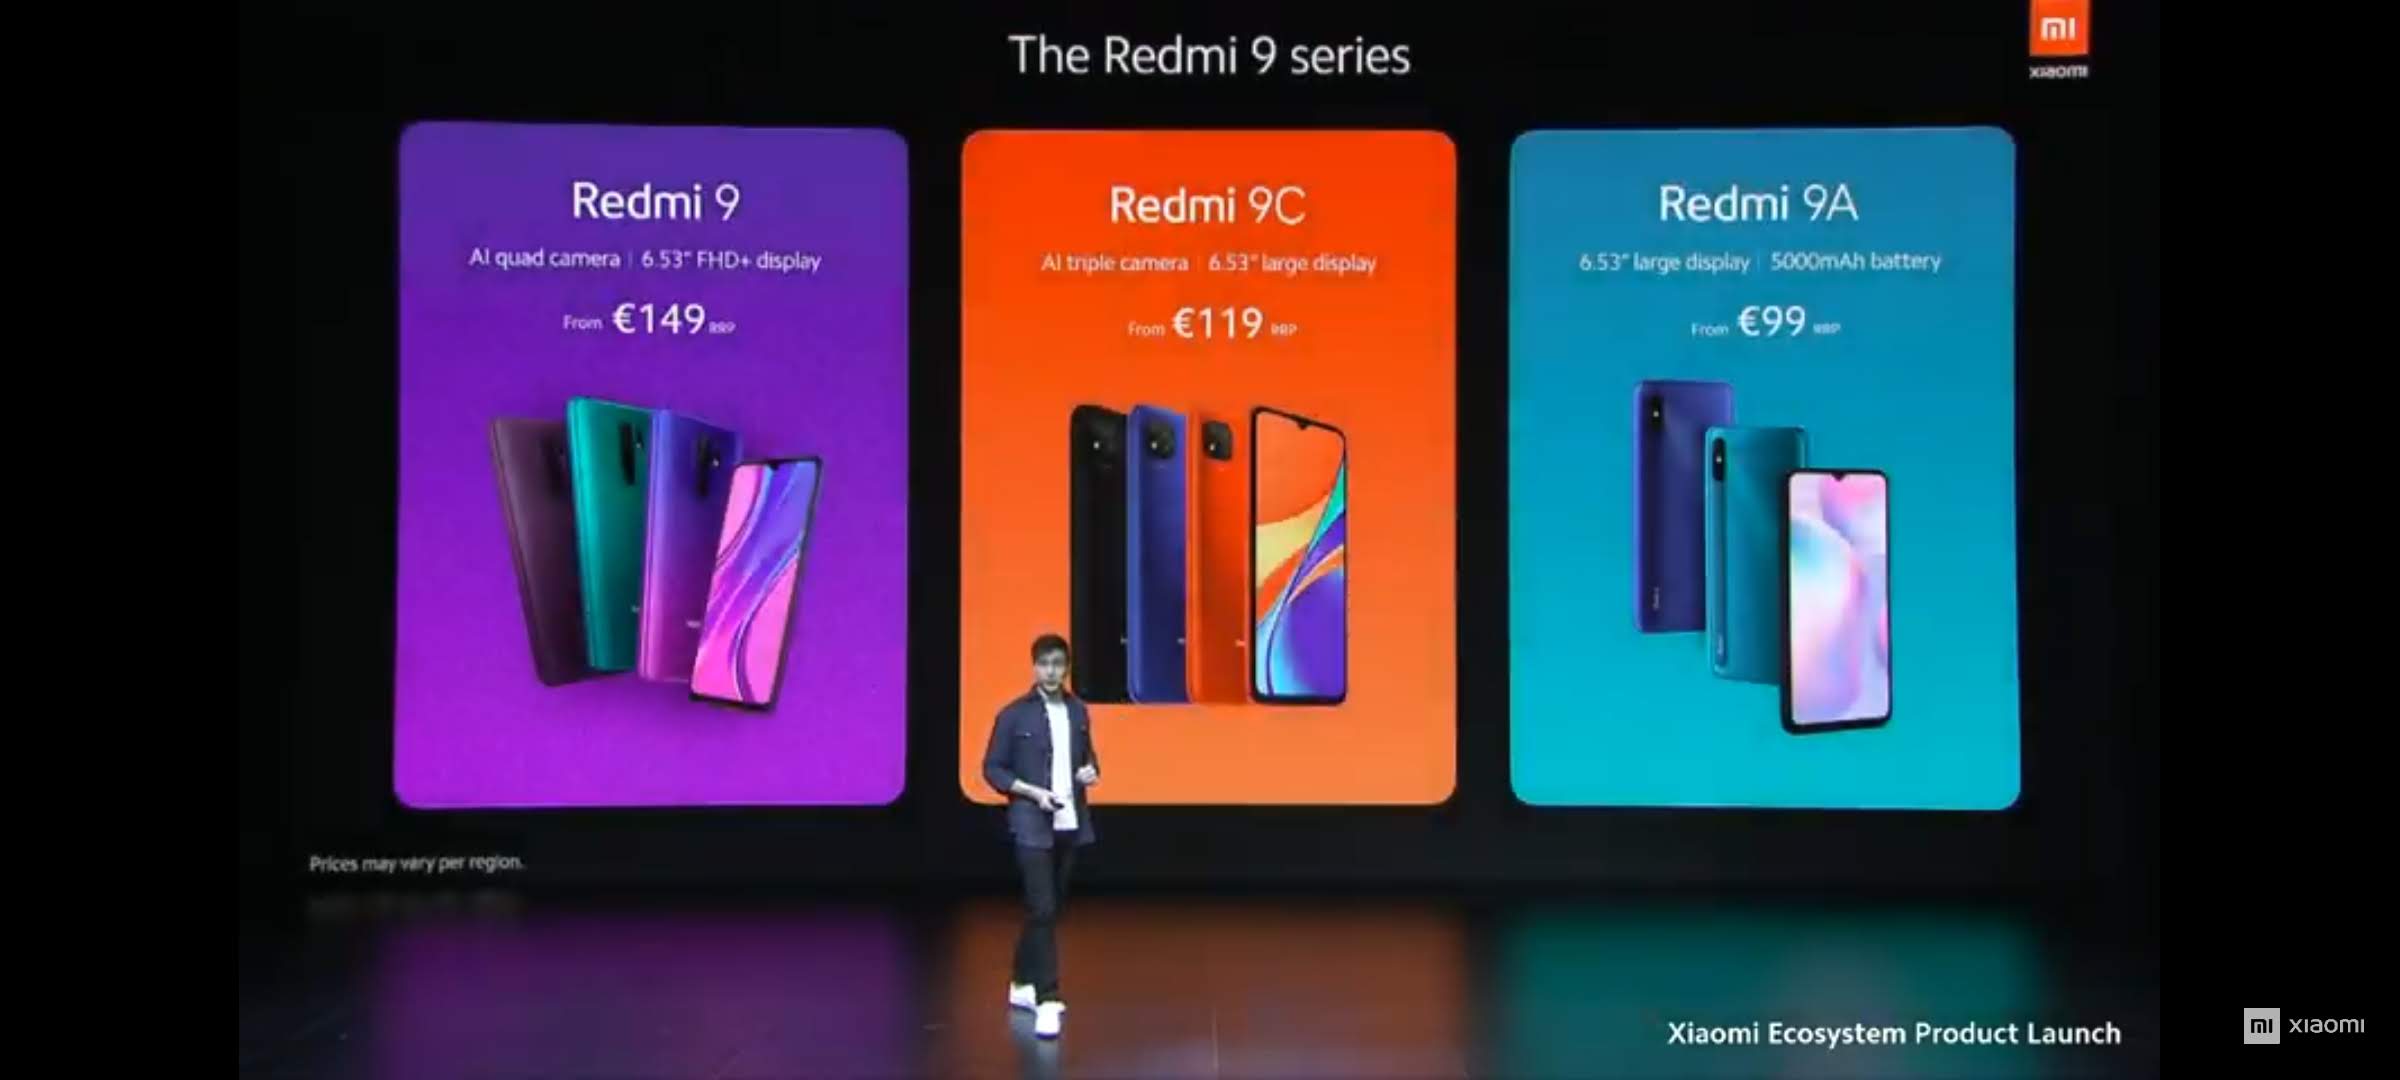 Xiaomi redmi 9 датчики. Смартфон Xiaomi Redmi 9c характеристики. Линейка смартфонов Xiaomi 9. Конкуренты смартфона Xiaomi Redmi 9c. Xiaomi Redmi 9 вся линейка.